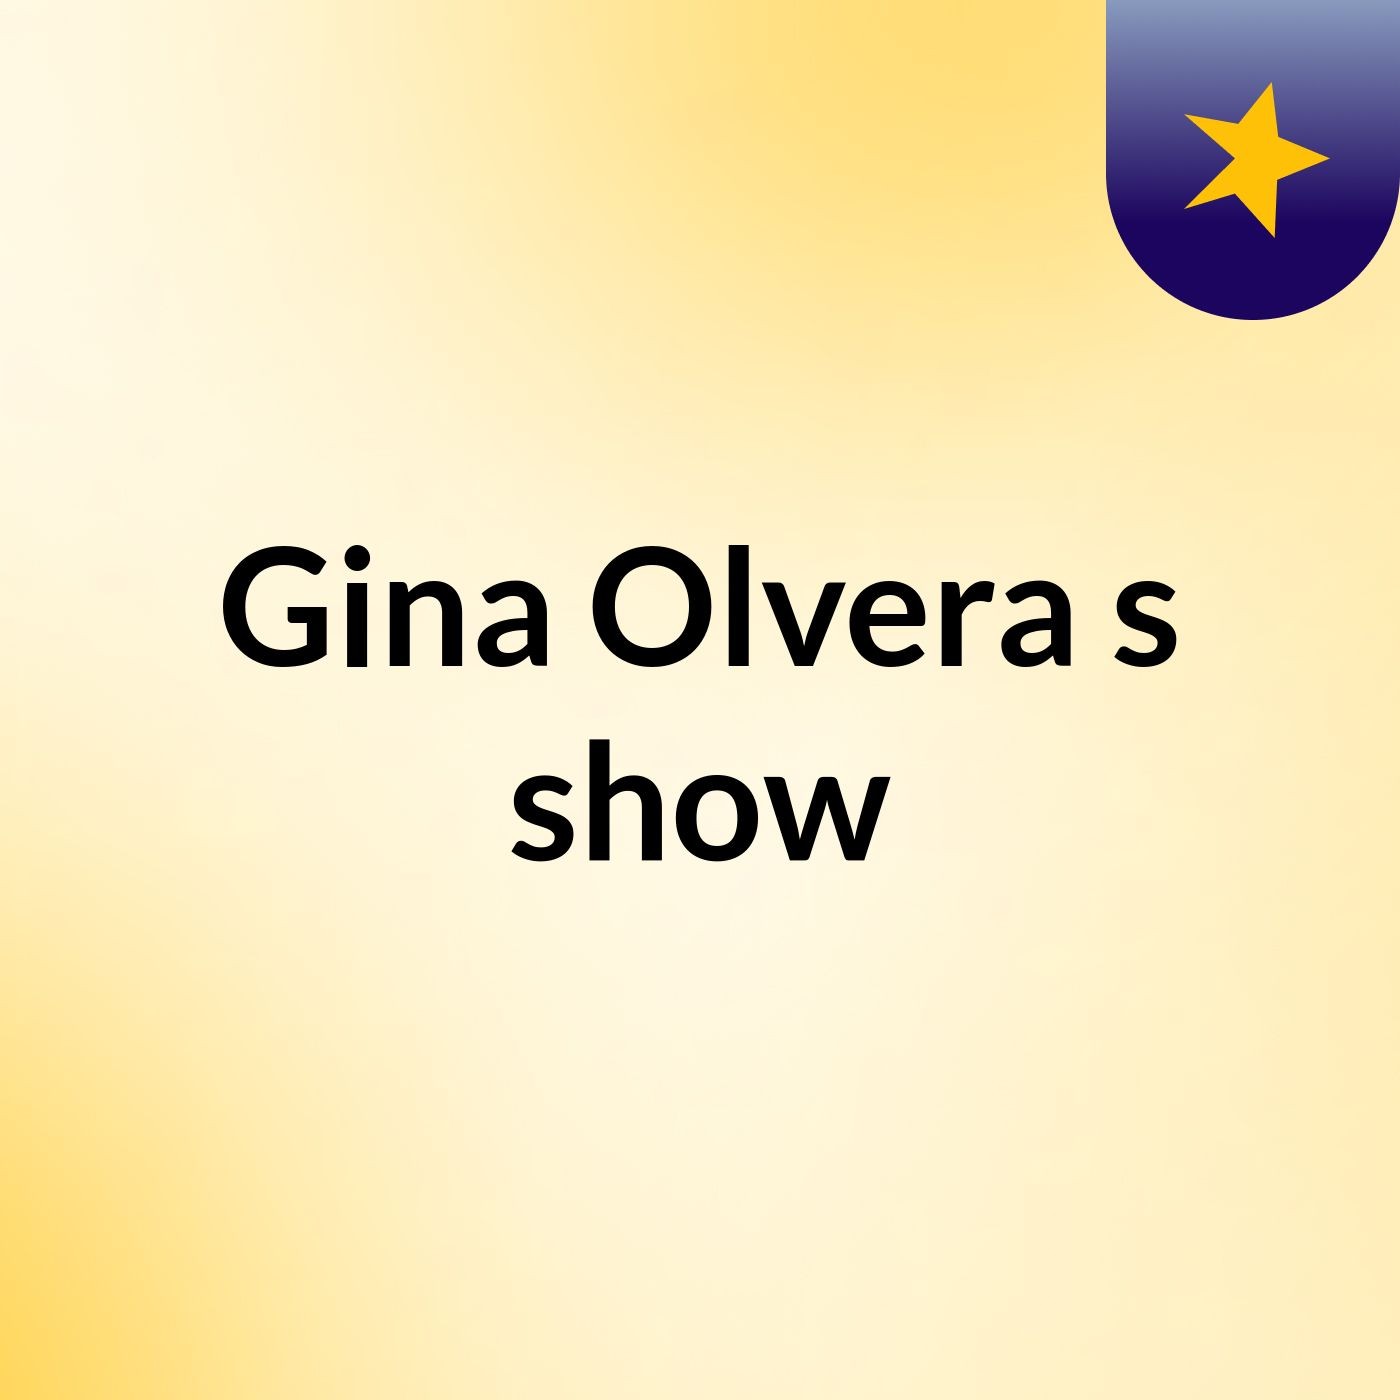 Gina Olvera's show